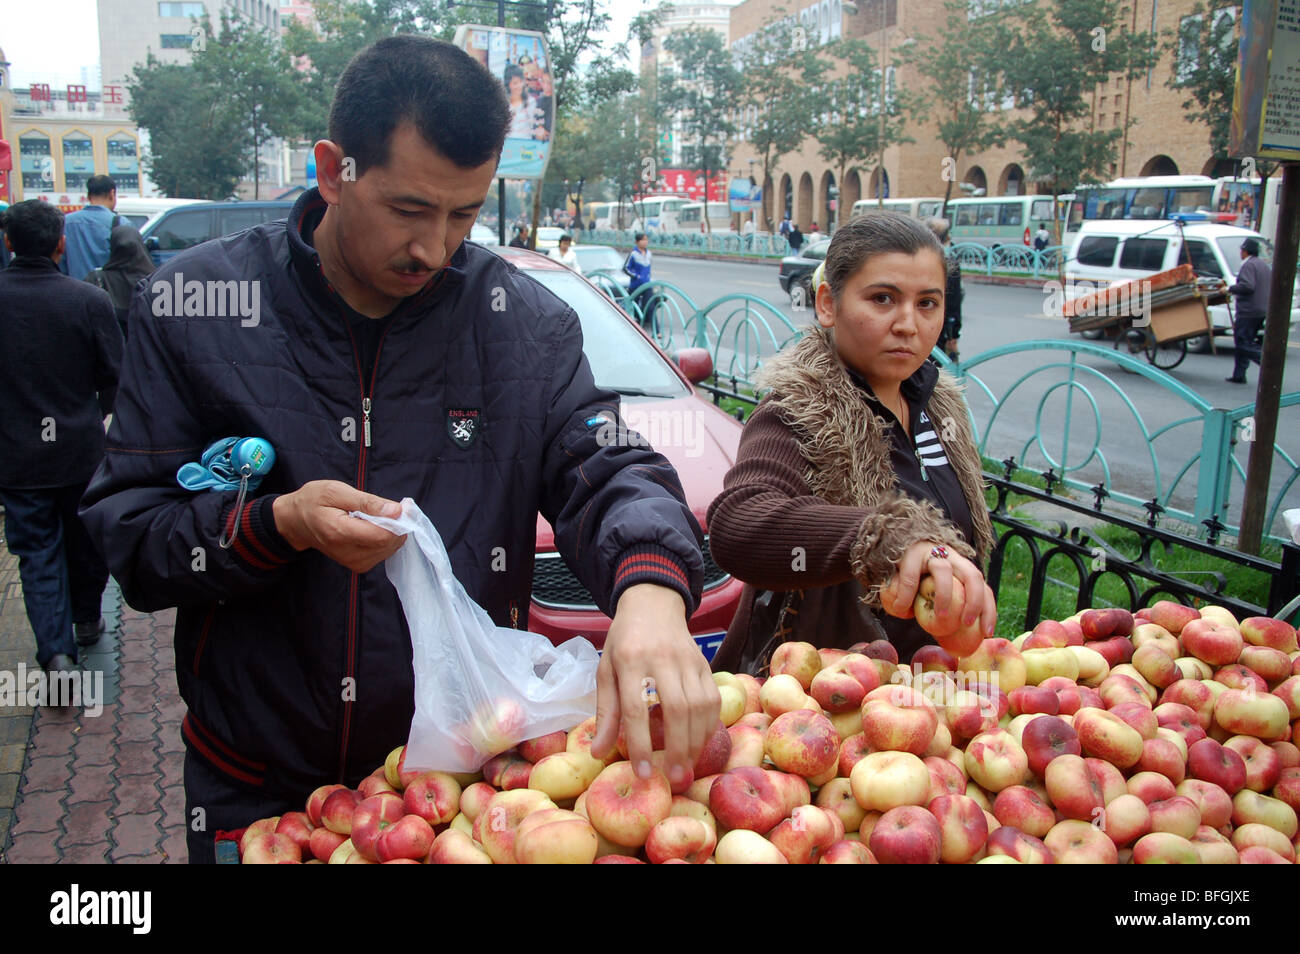 Uyghur people in the street markets of Urumqi, Xinjiang, CHINA Stock Photo